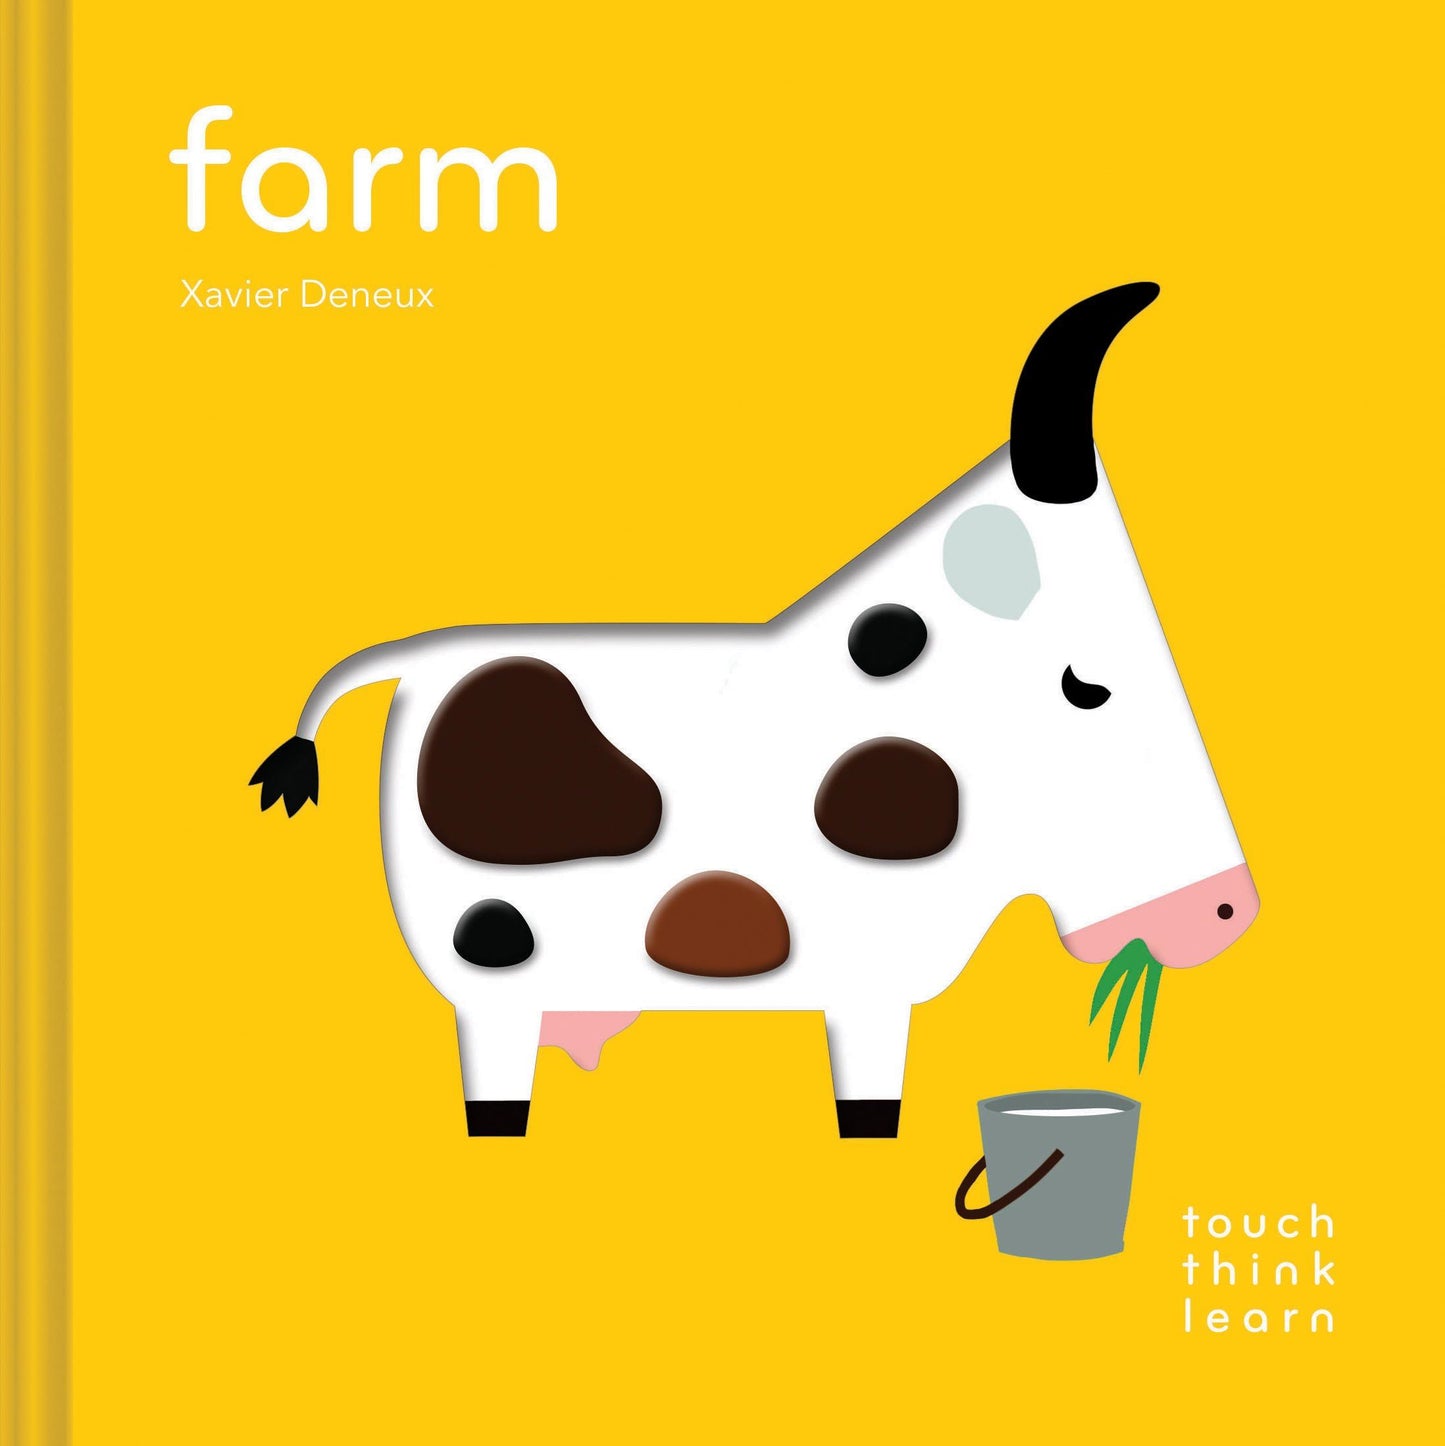 Farm ( Touch Think Learn )